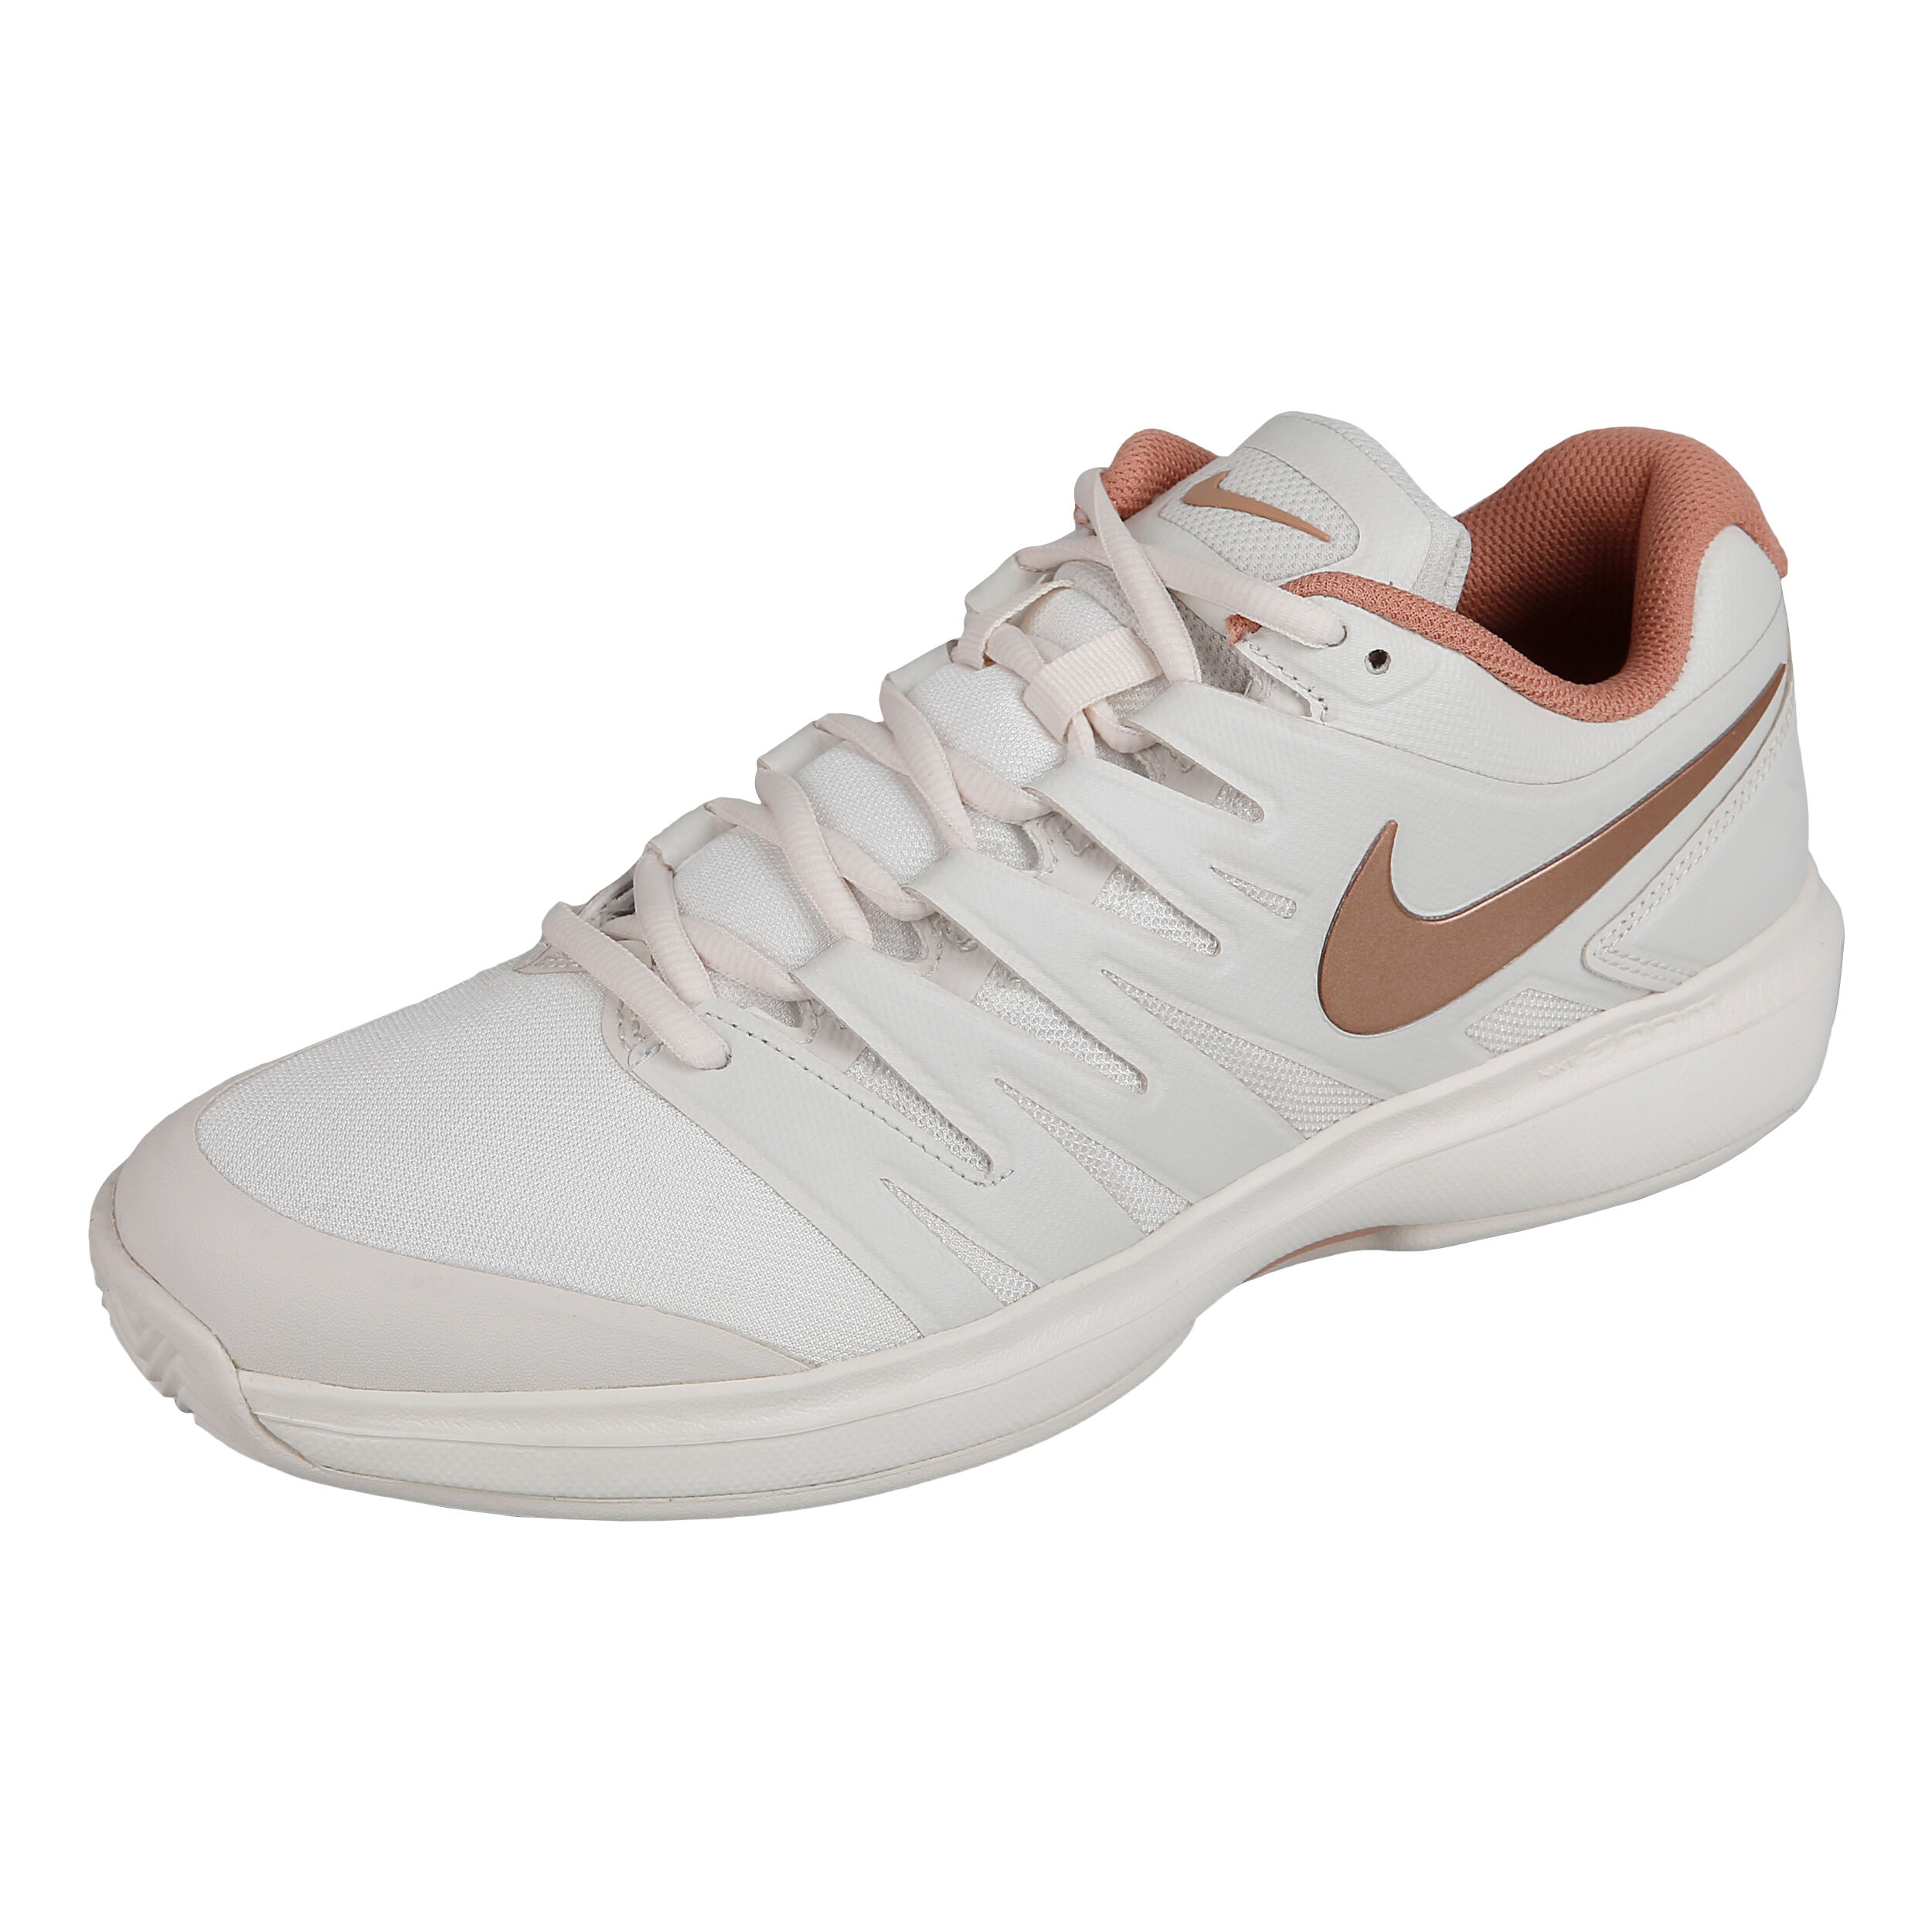 buy Nike Air Zoom Prestige Clay Court Shoe Women - Cream, Ecru online |  Tennis-Point